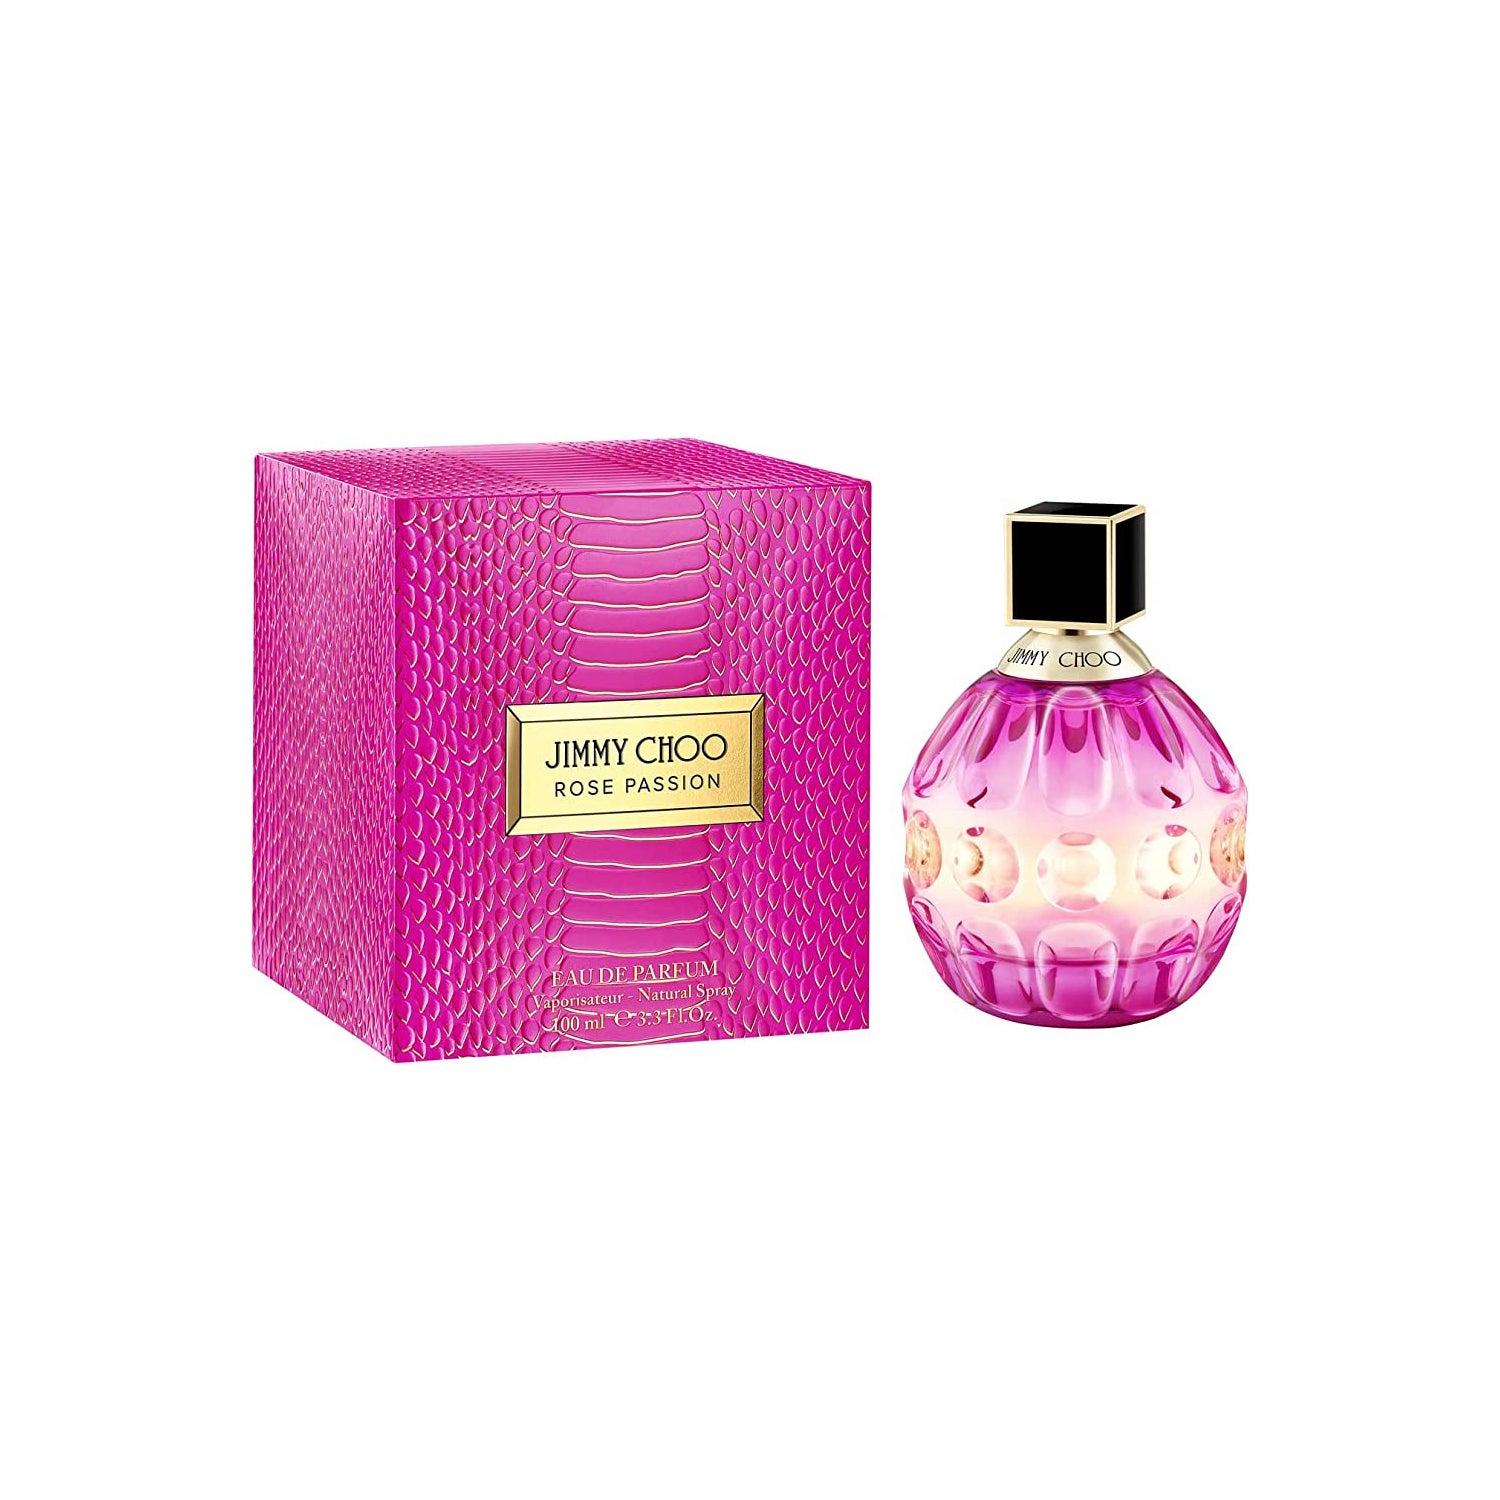 I Want Choo Forever Eau de Parfum Travel Spray - Jimmy Choo | Ulta Beauty